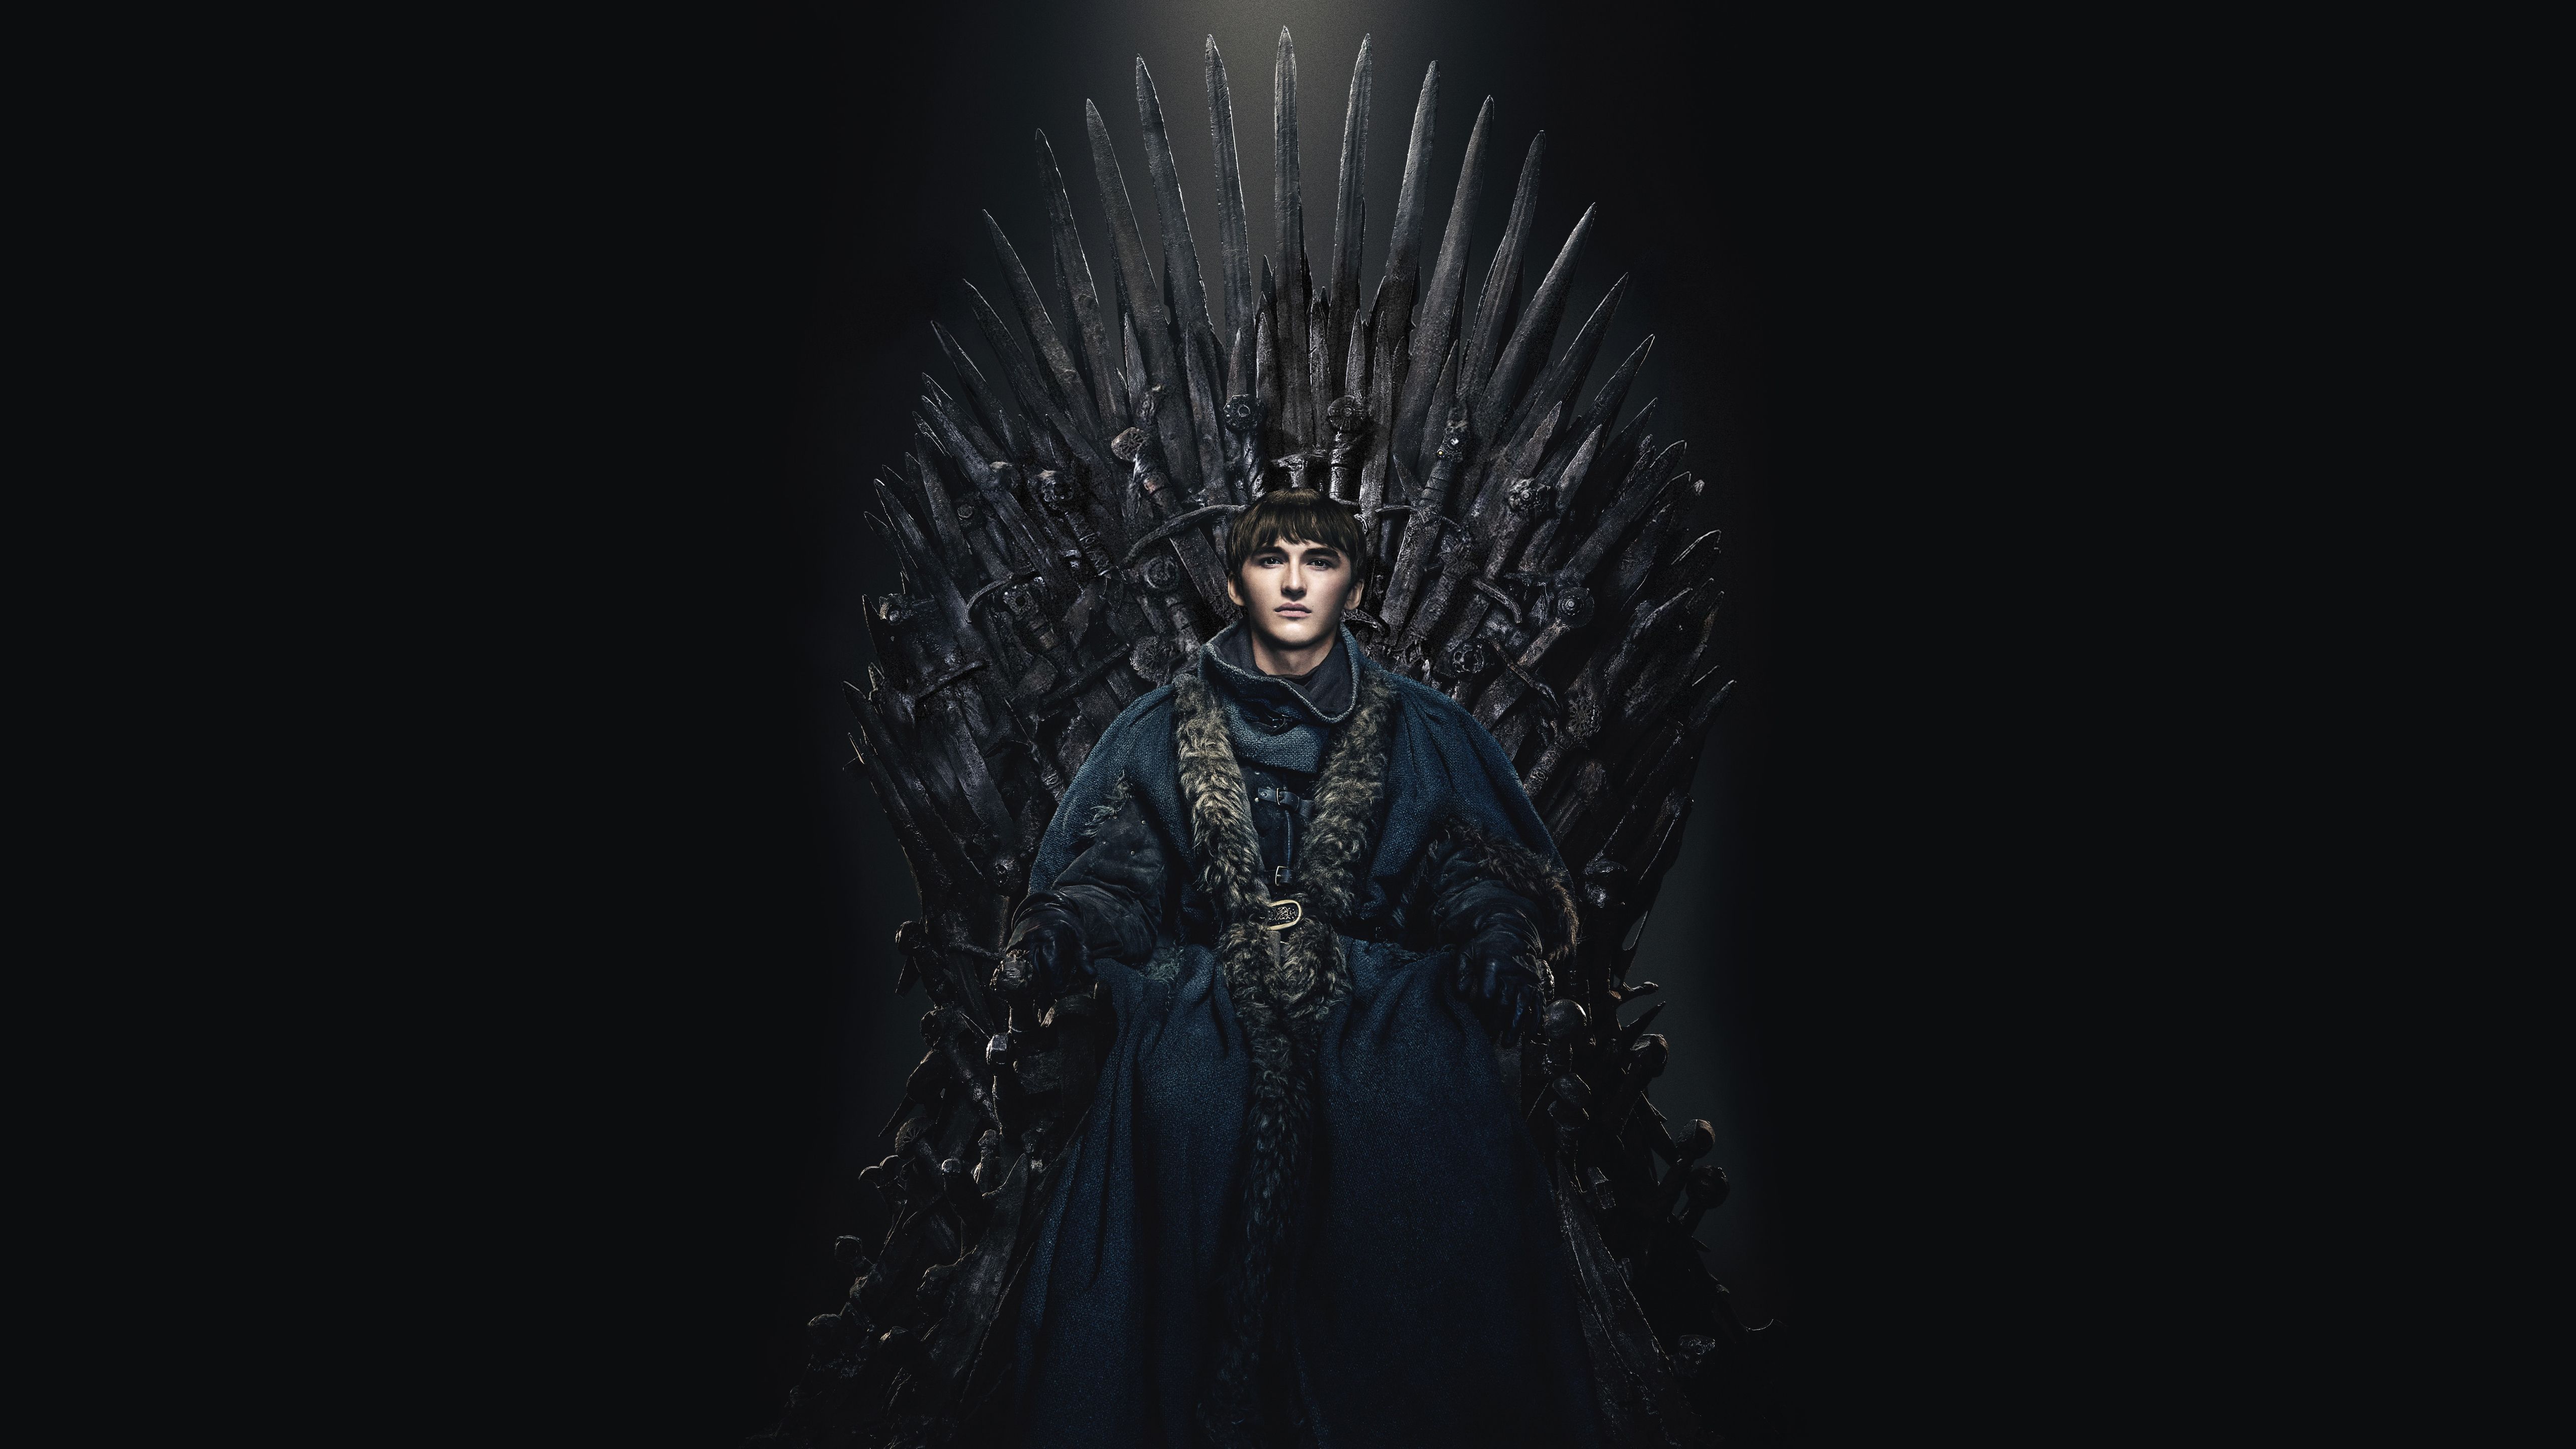 Bran Stark in The Iron Throne 5K Wallpaper, HD TV Series